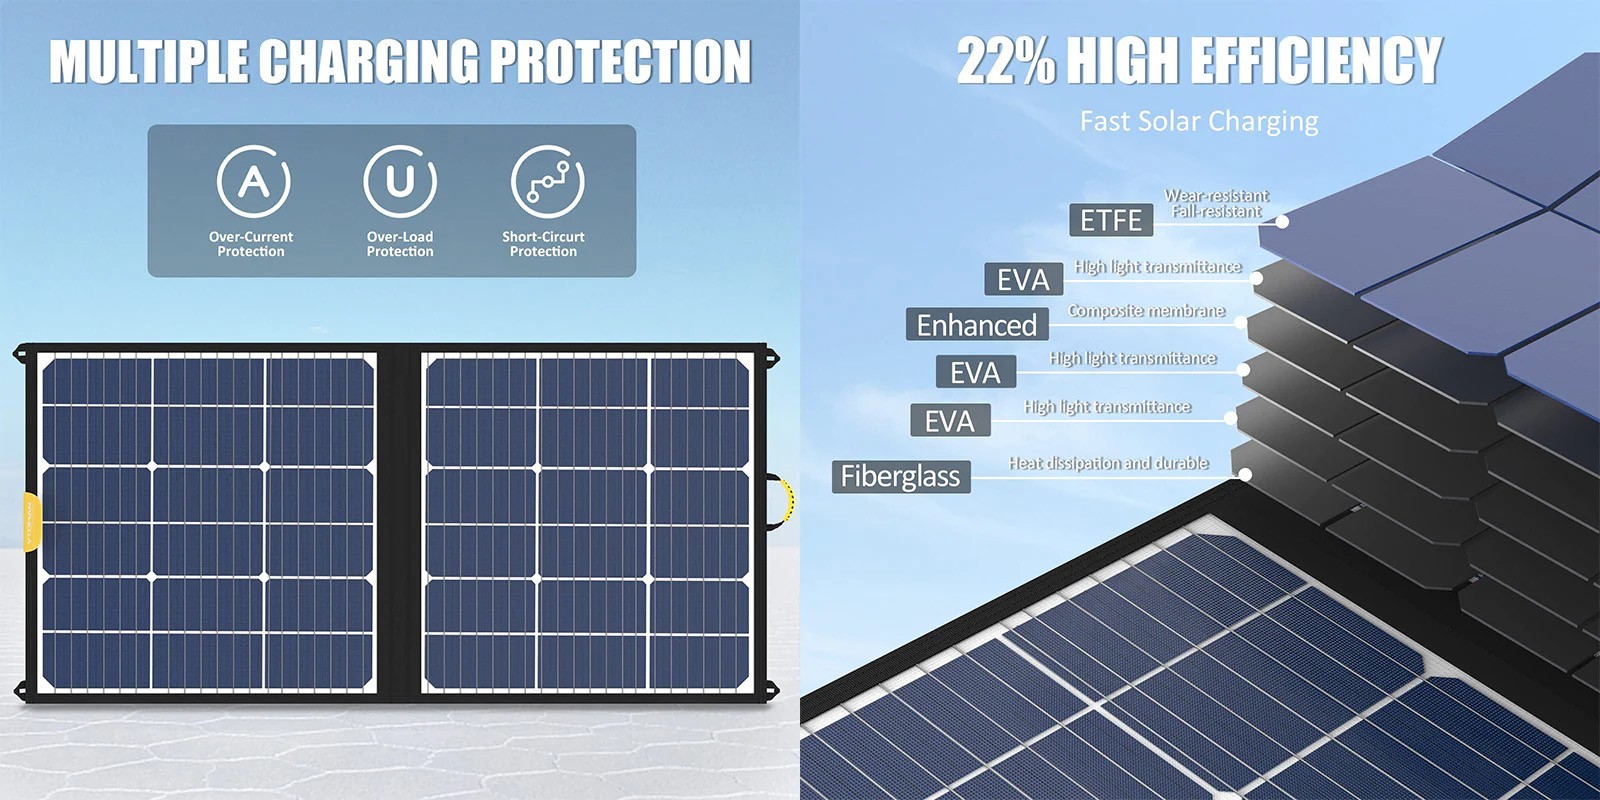 VTOMAN 100W Foldable Solar Panel, 22% Conversion Efficiency, IP65 Waterproof, Adjustable Kickstands